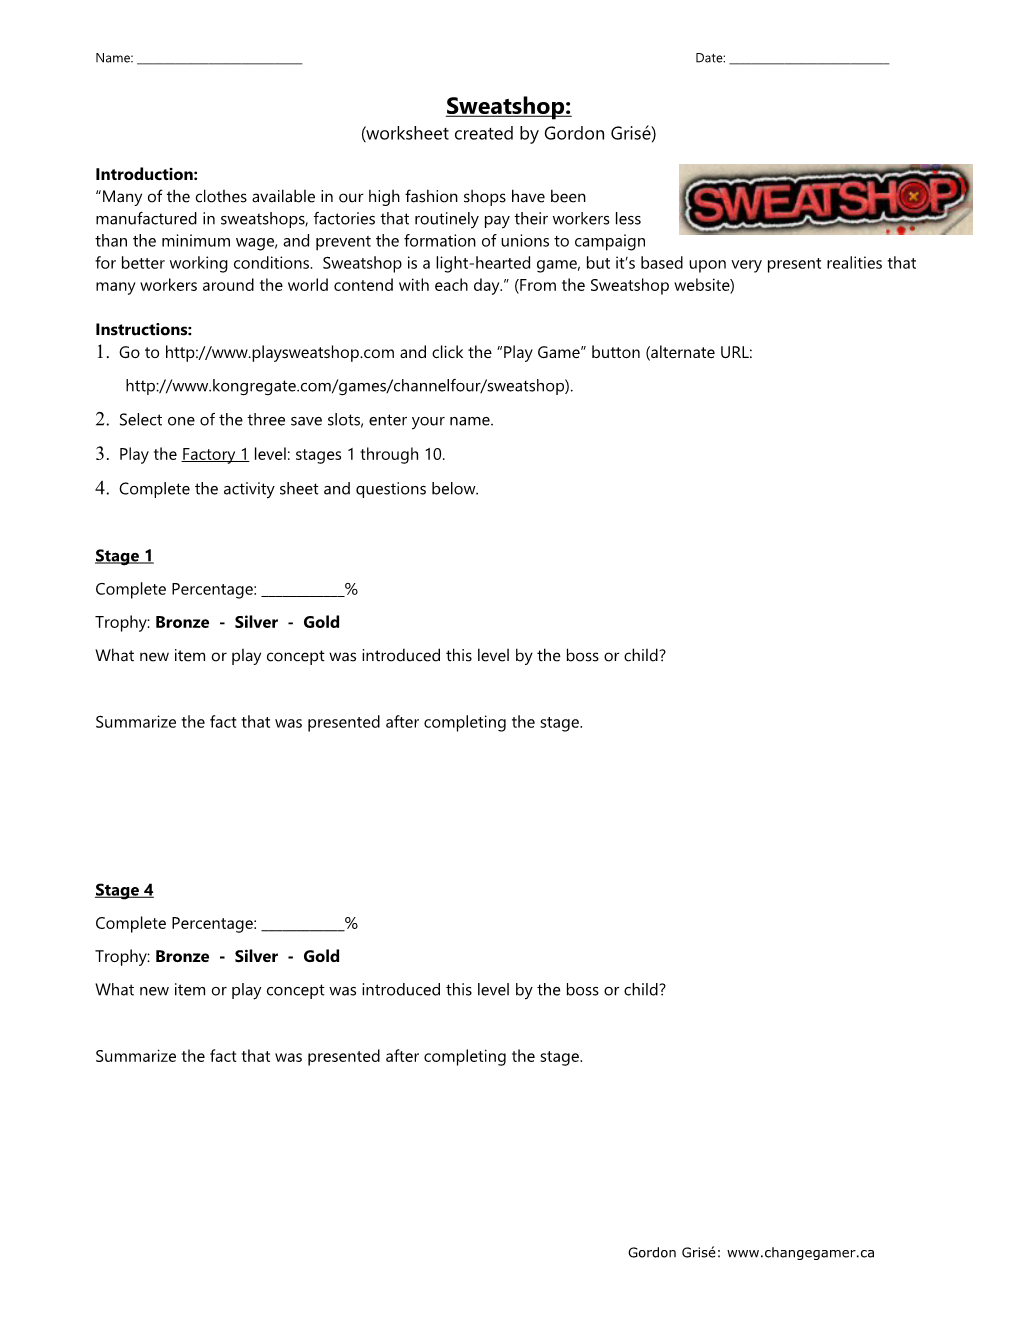 Sweatshop: (Worksheet Created by Gordon Grisé)